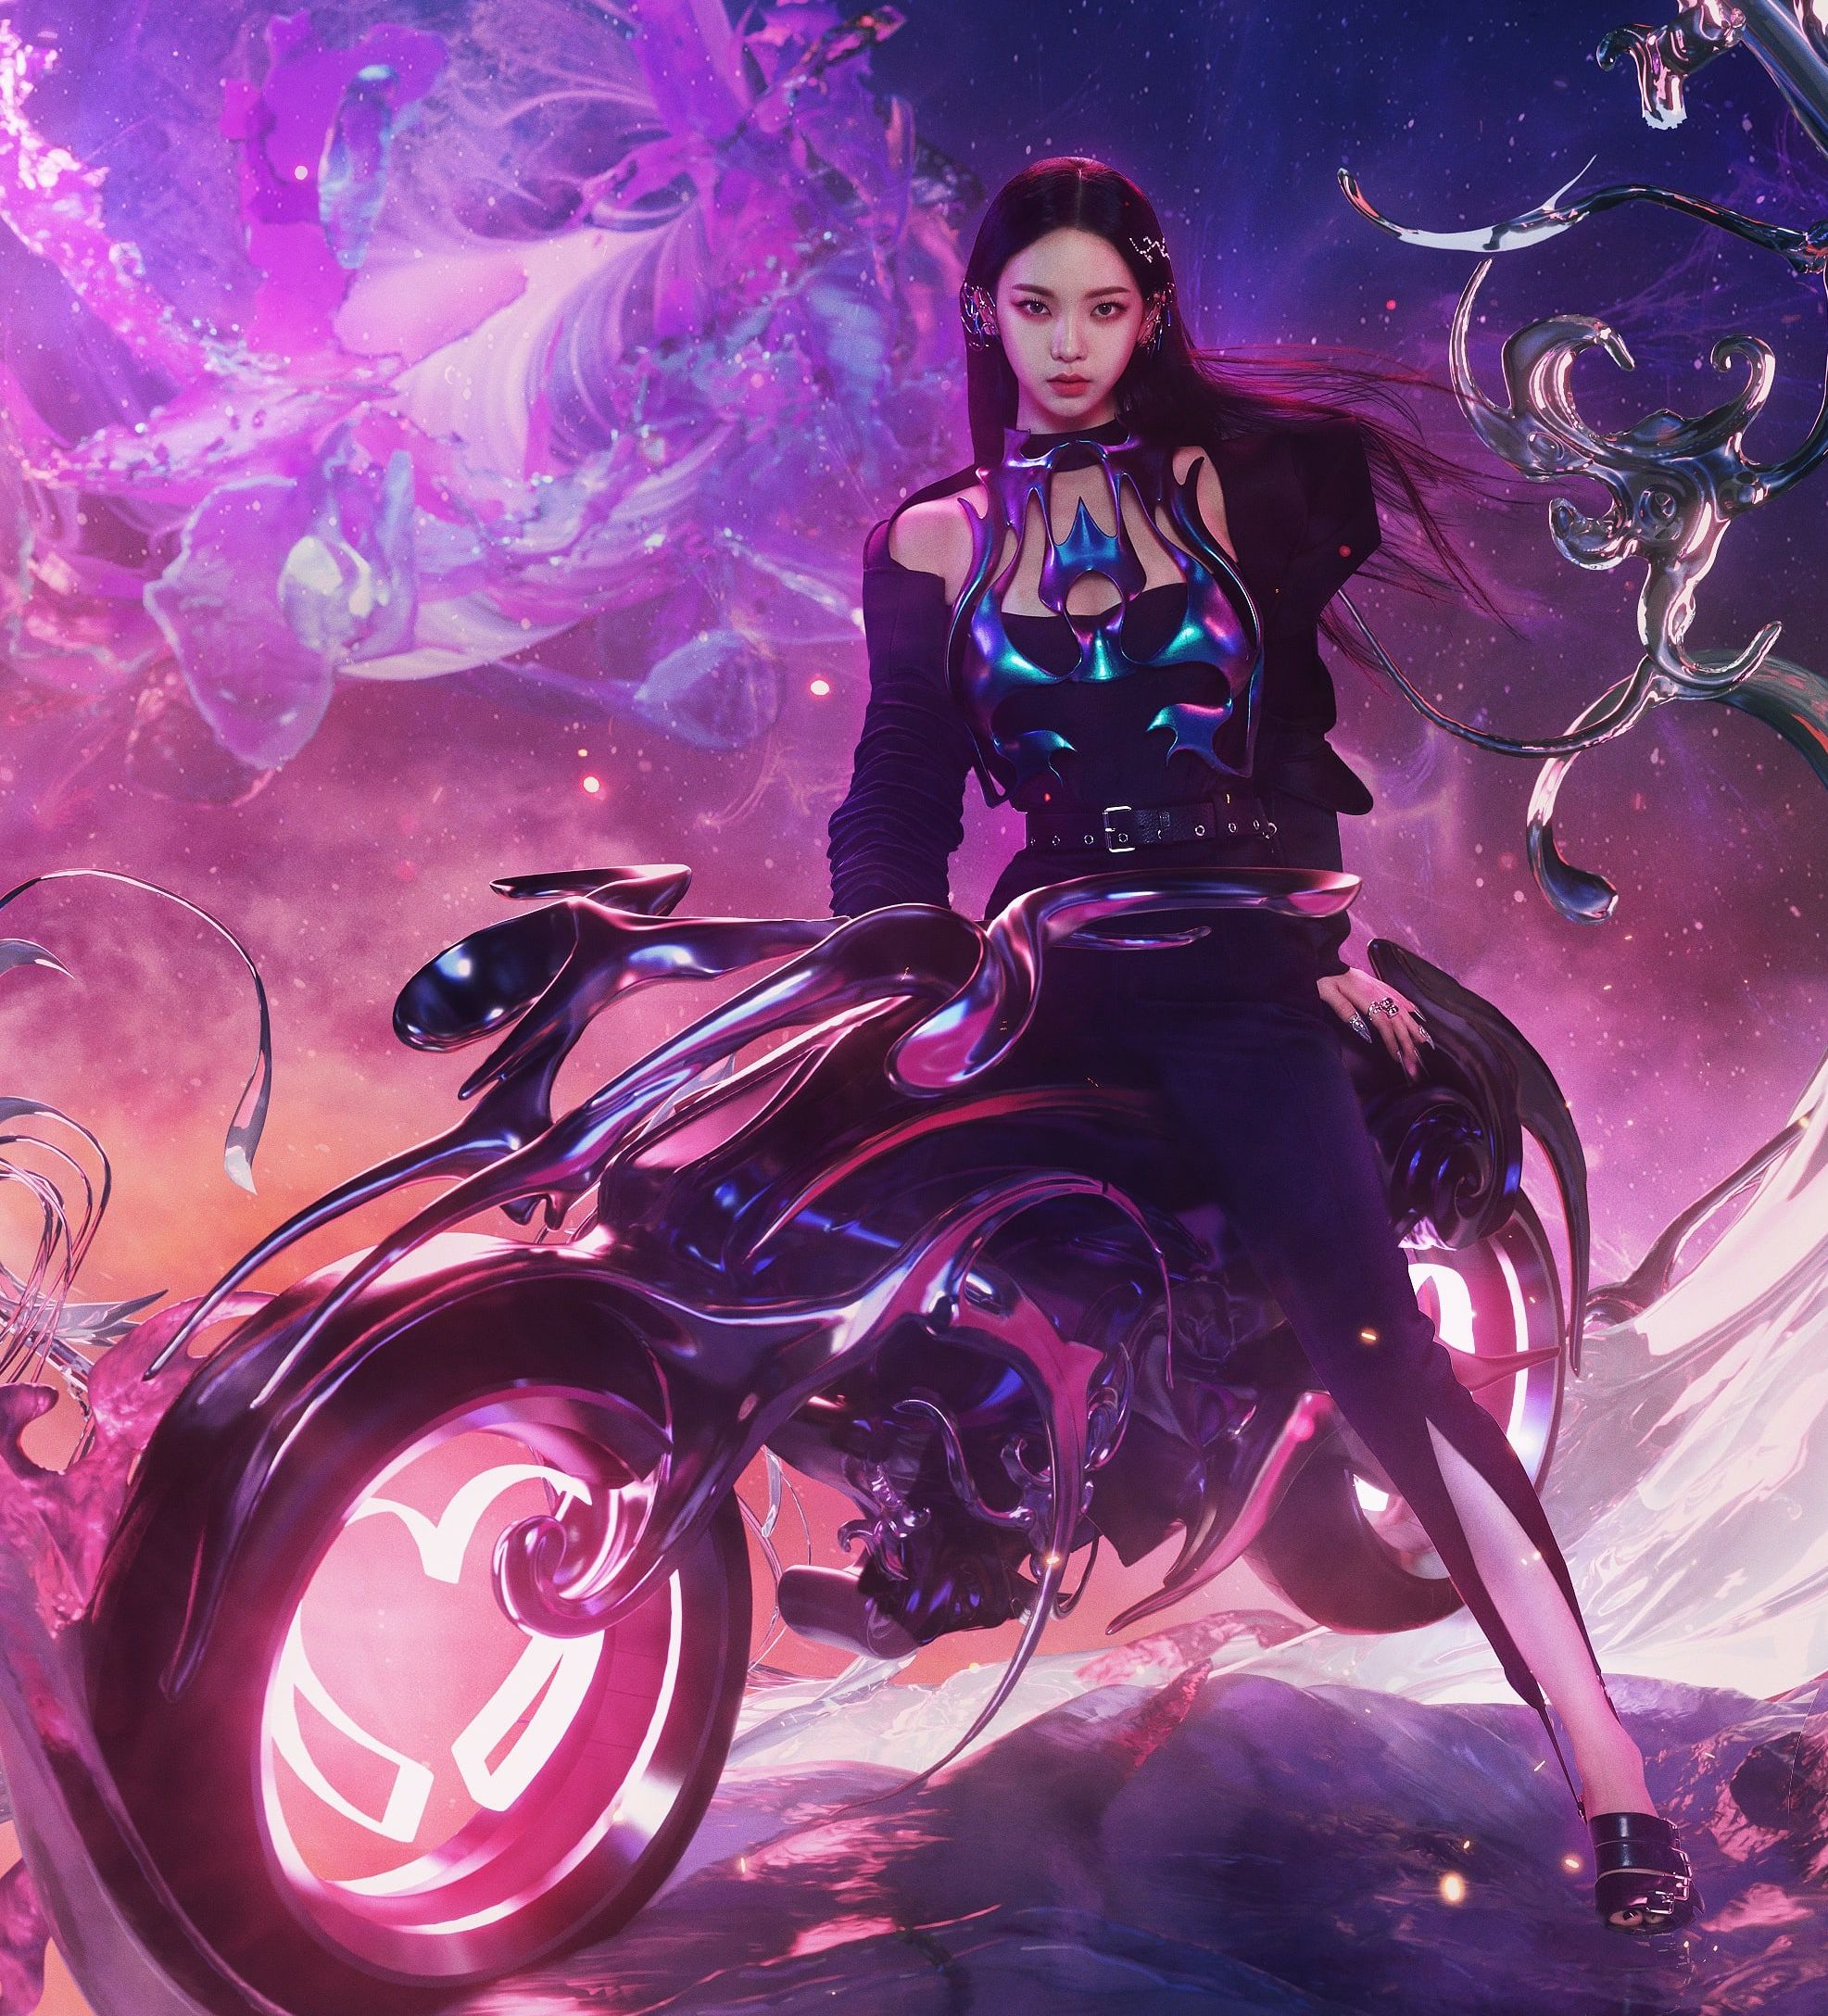 Poster Karina dengan kostum dan sepeda motor futuristik yang bikin heboh linimasa Twitter./Soompi